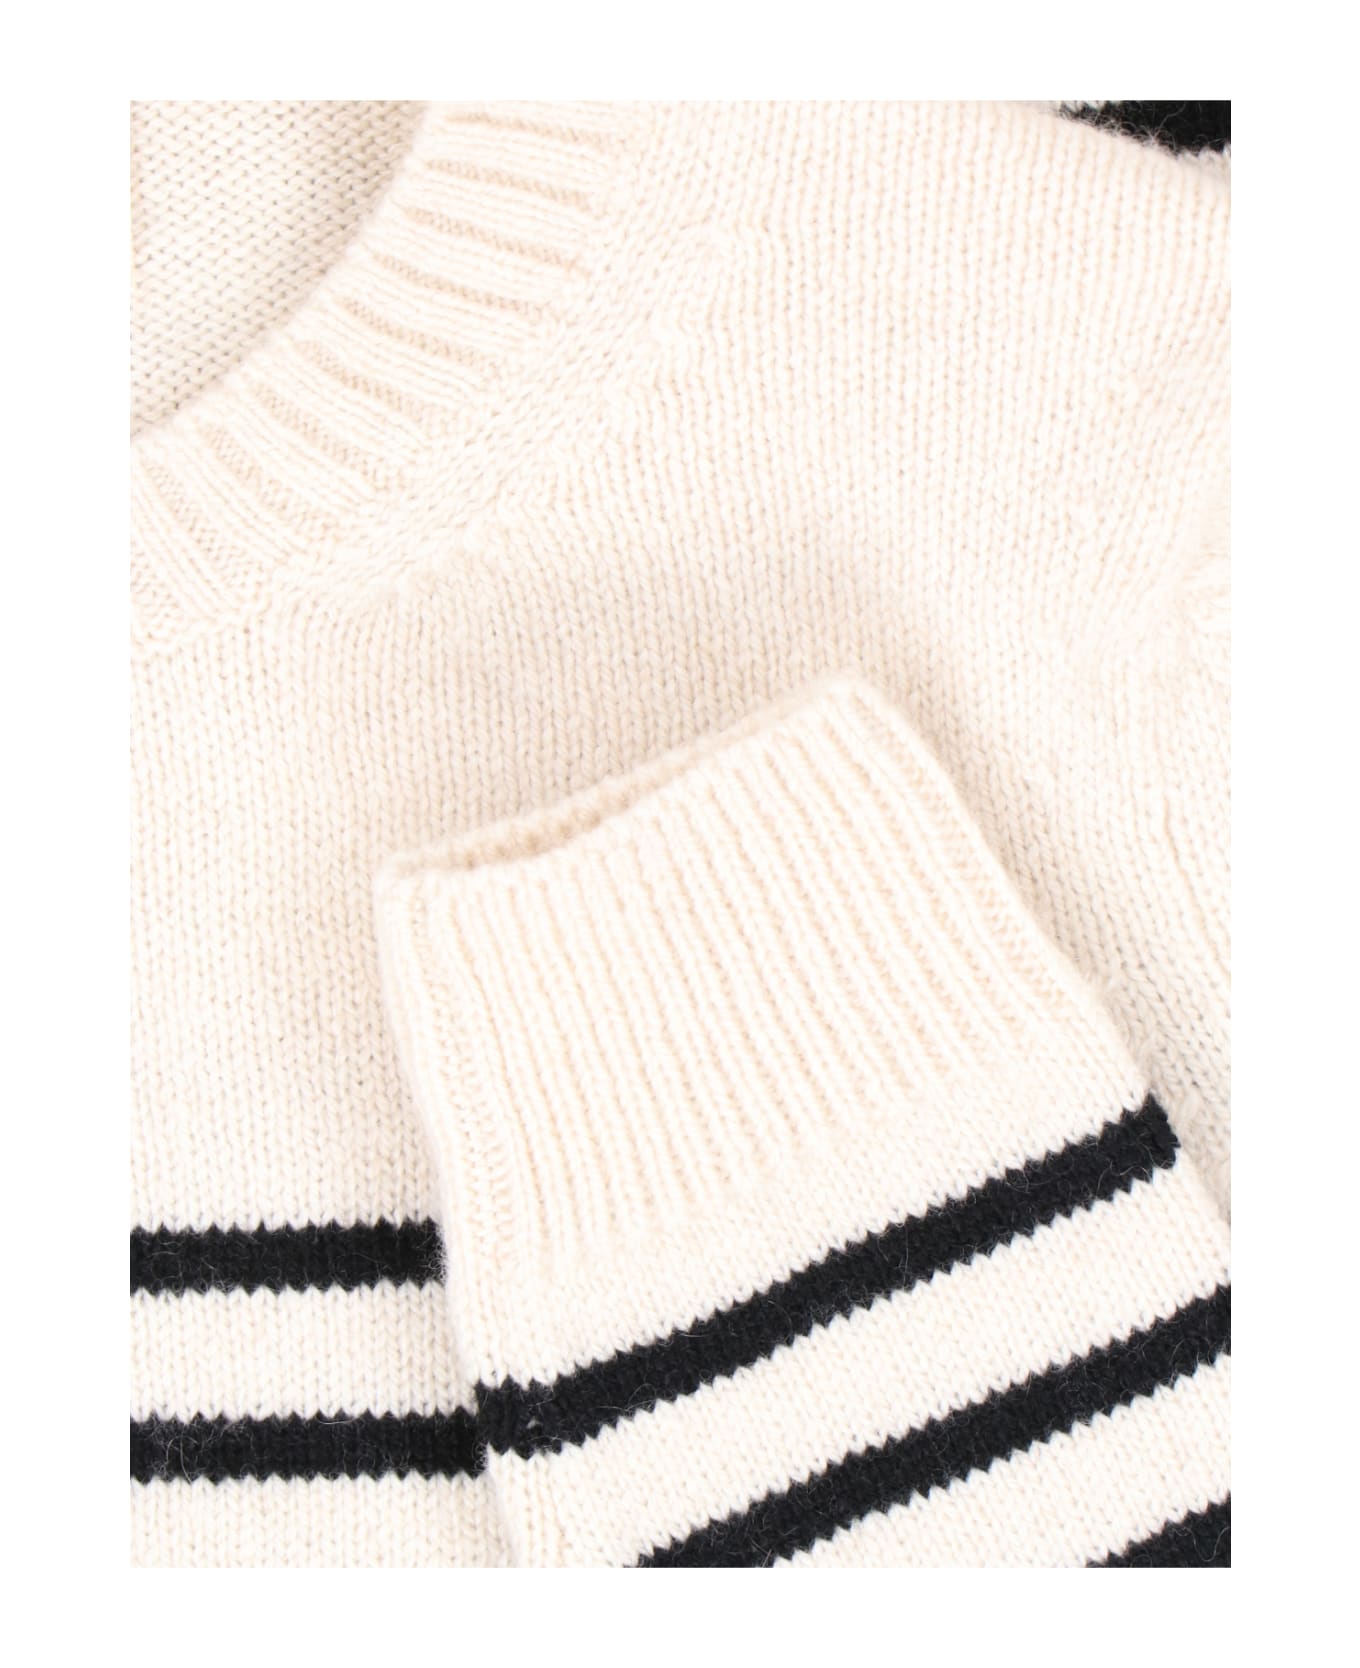 Khaite Striped Sweater - Crema